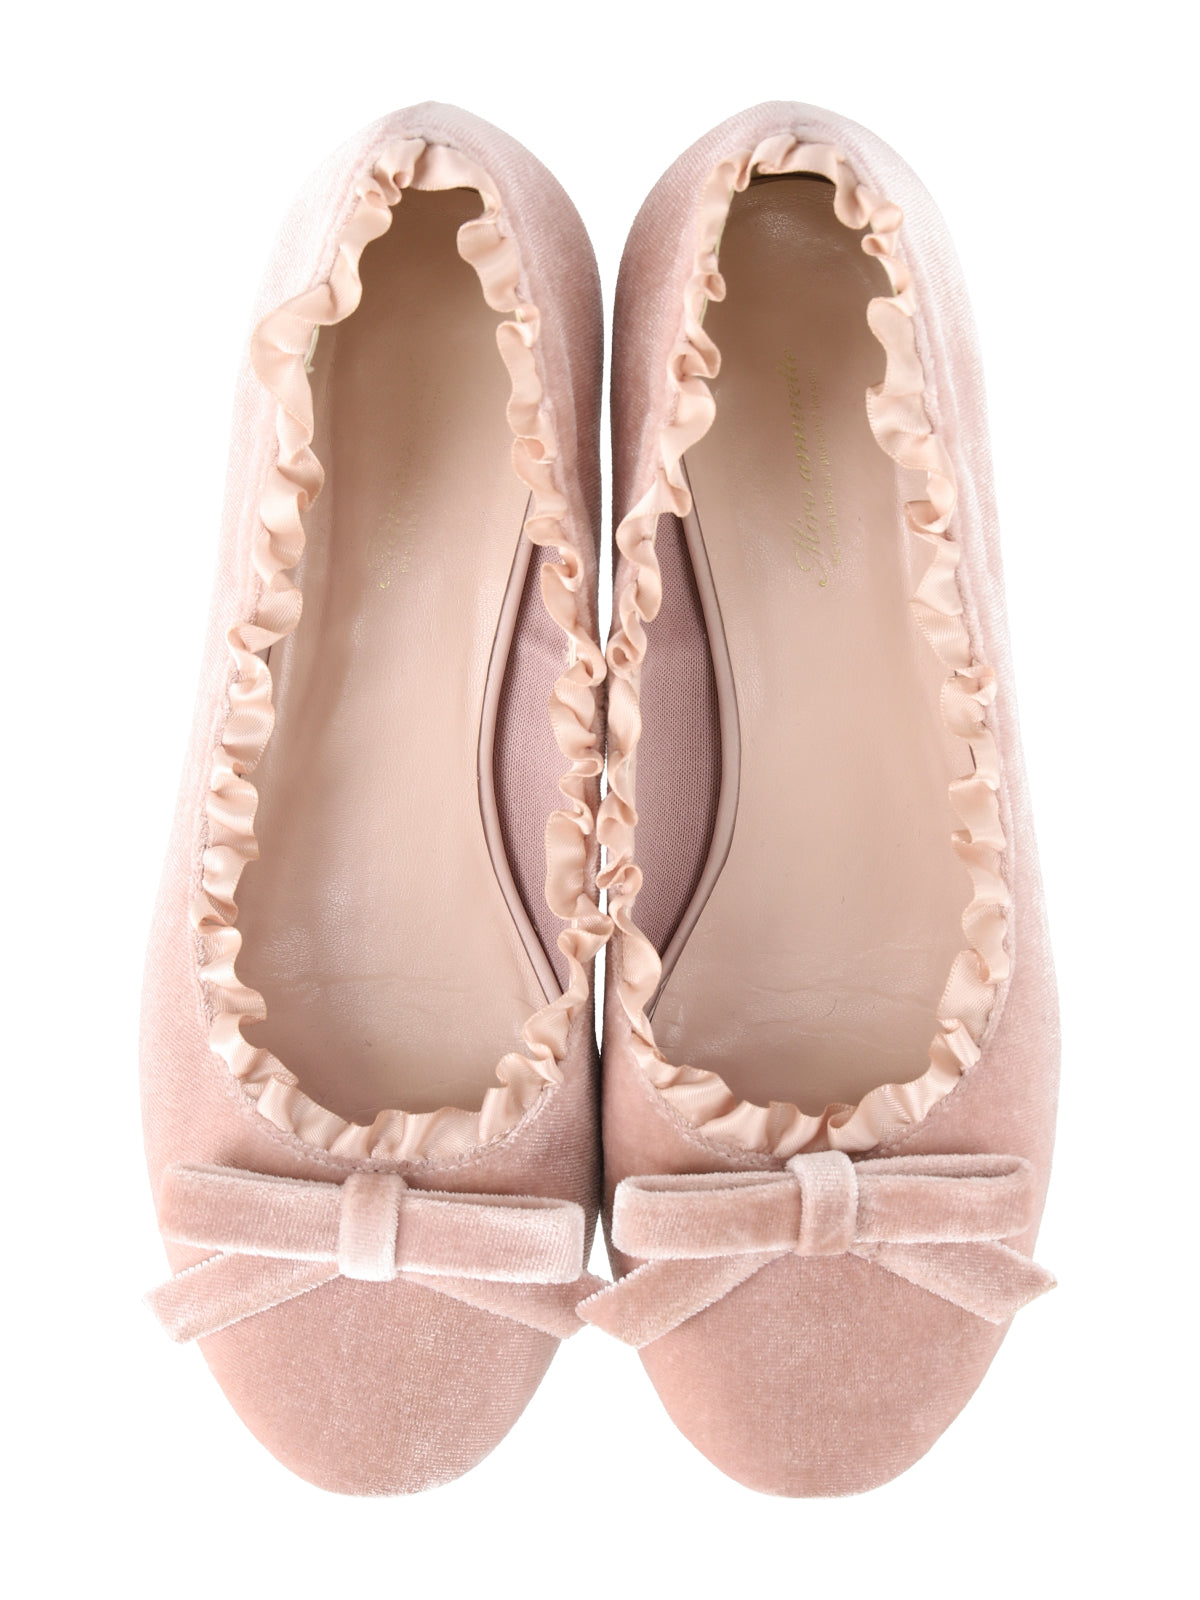 velour frill bloom ballet shoes